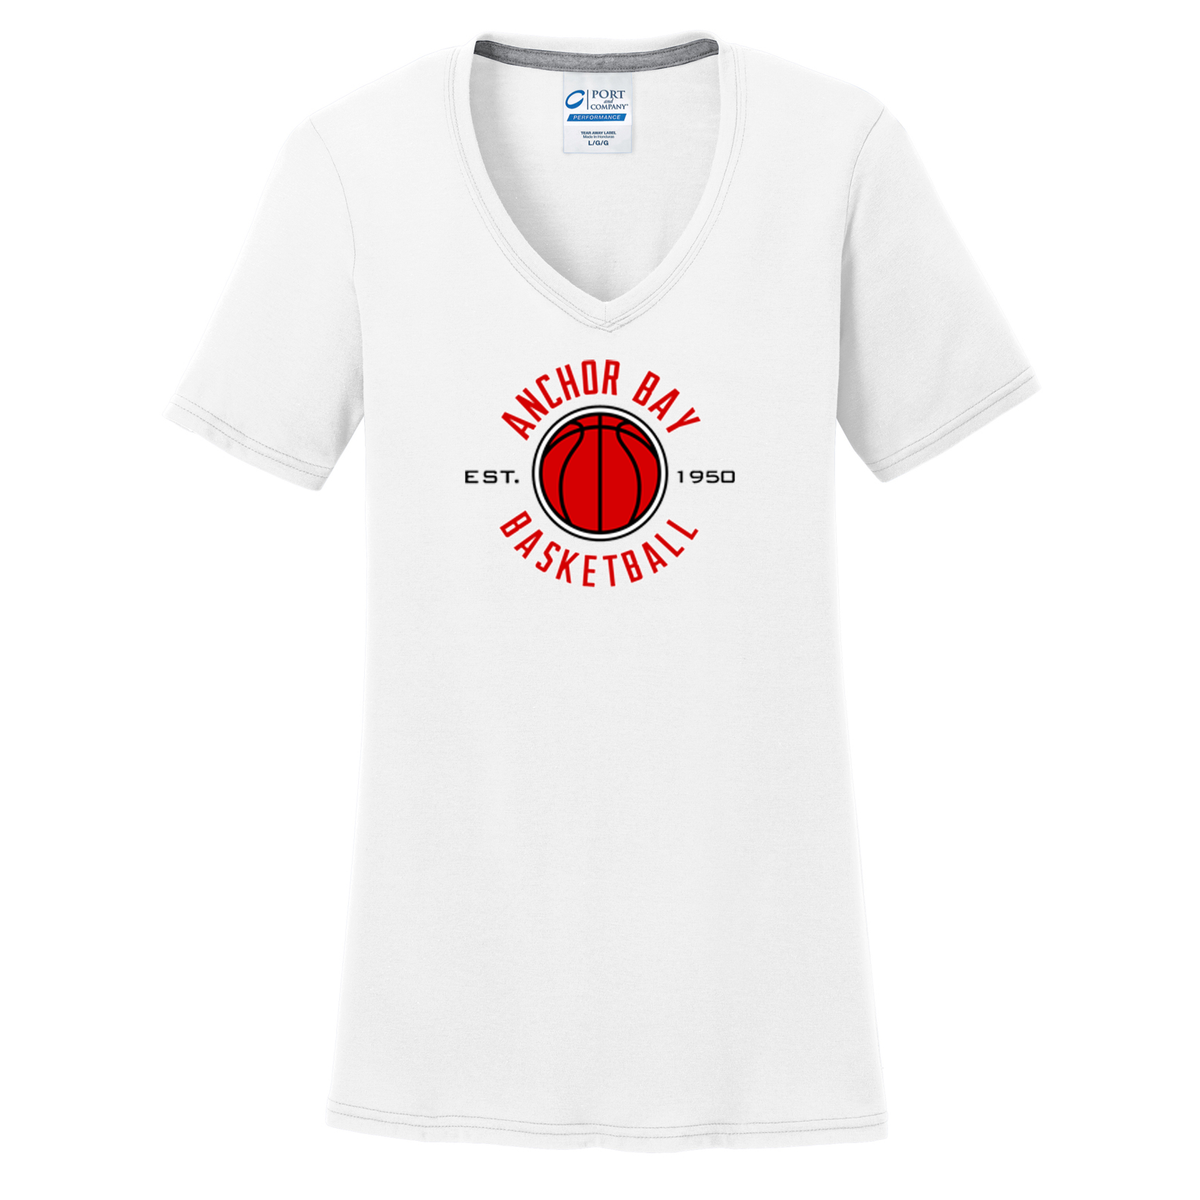 Anchor Bay Basketball Women's T-Shirt